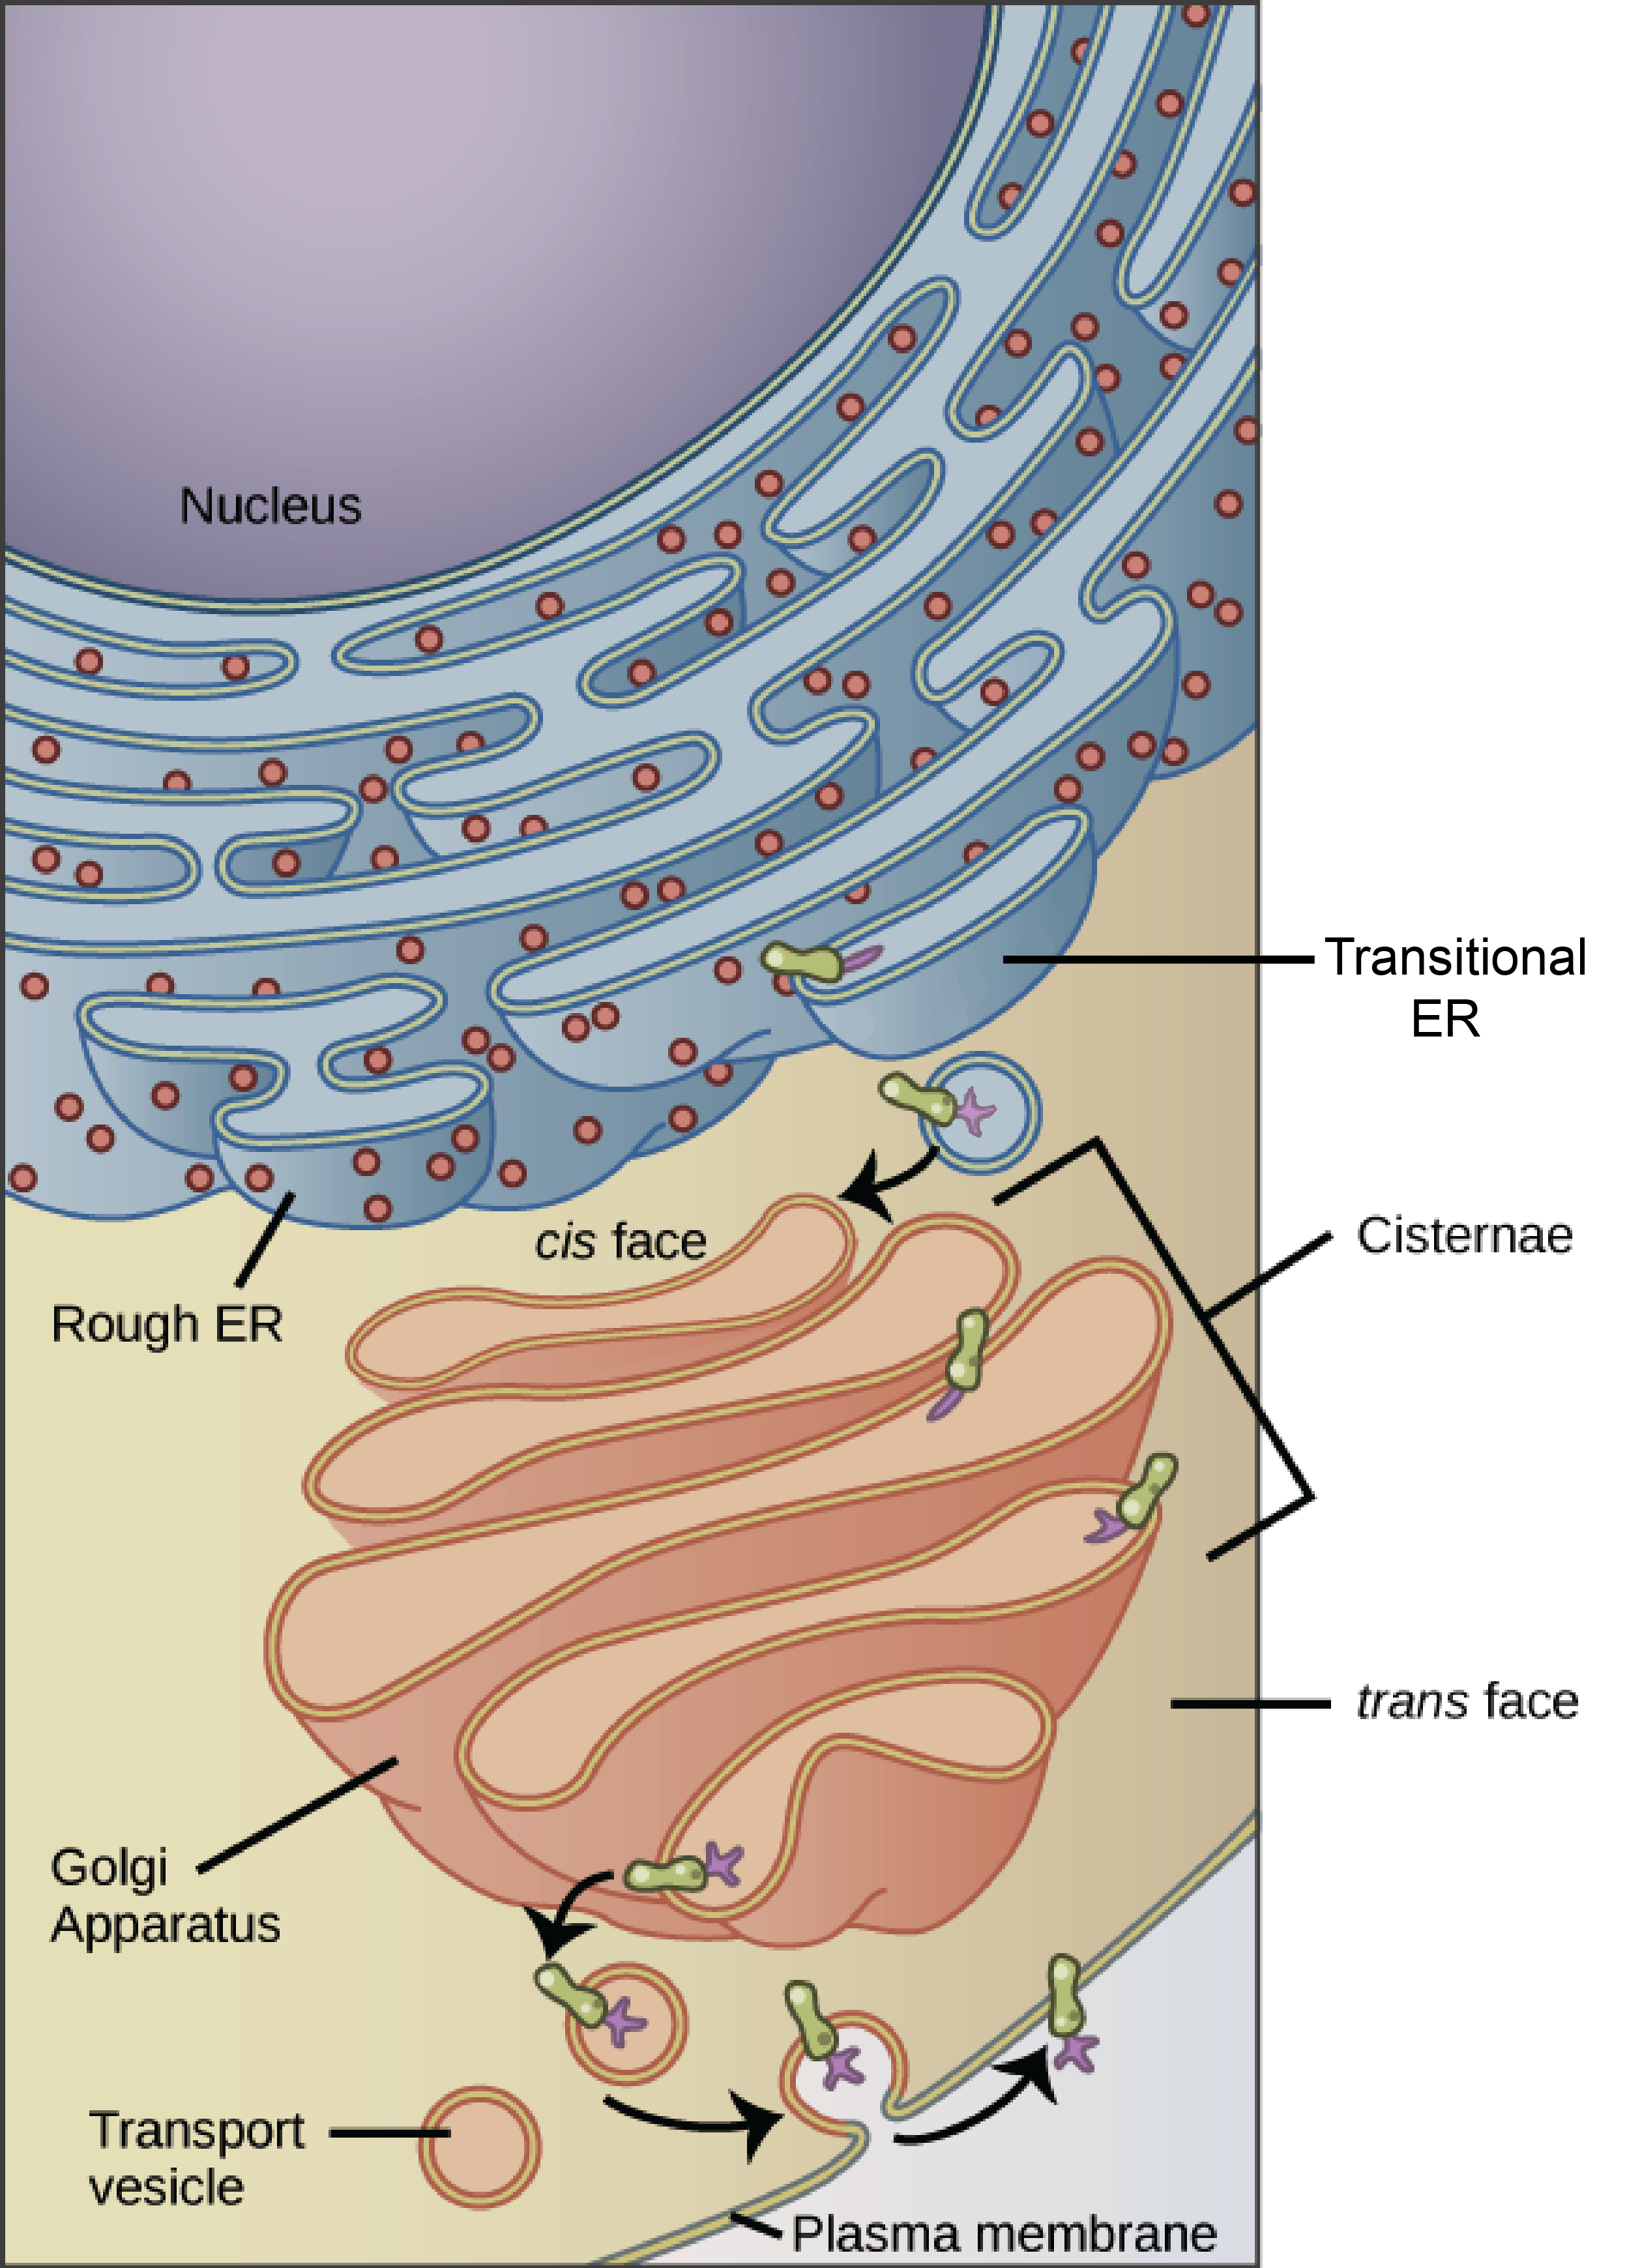 Golgi Apparatus Overview